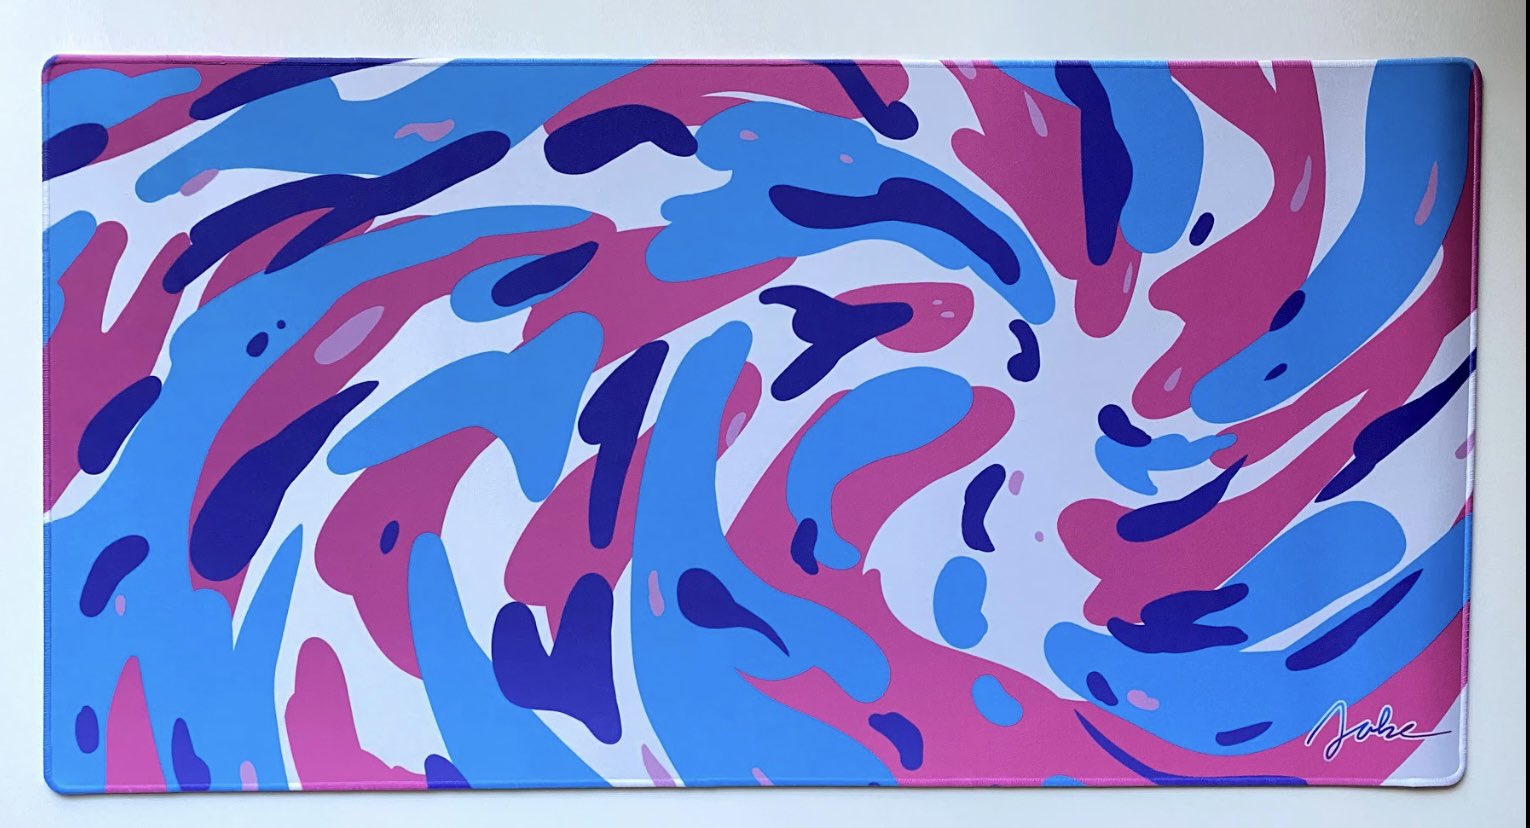 Download wallpaper 3840x2400 liquid, pink-blue drops, abstract 4k wallaper, 4k  ultra hd 16:10 wallpaper, 3840x2400 hd background, 25285